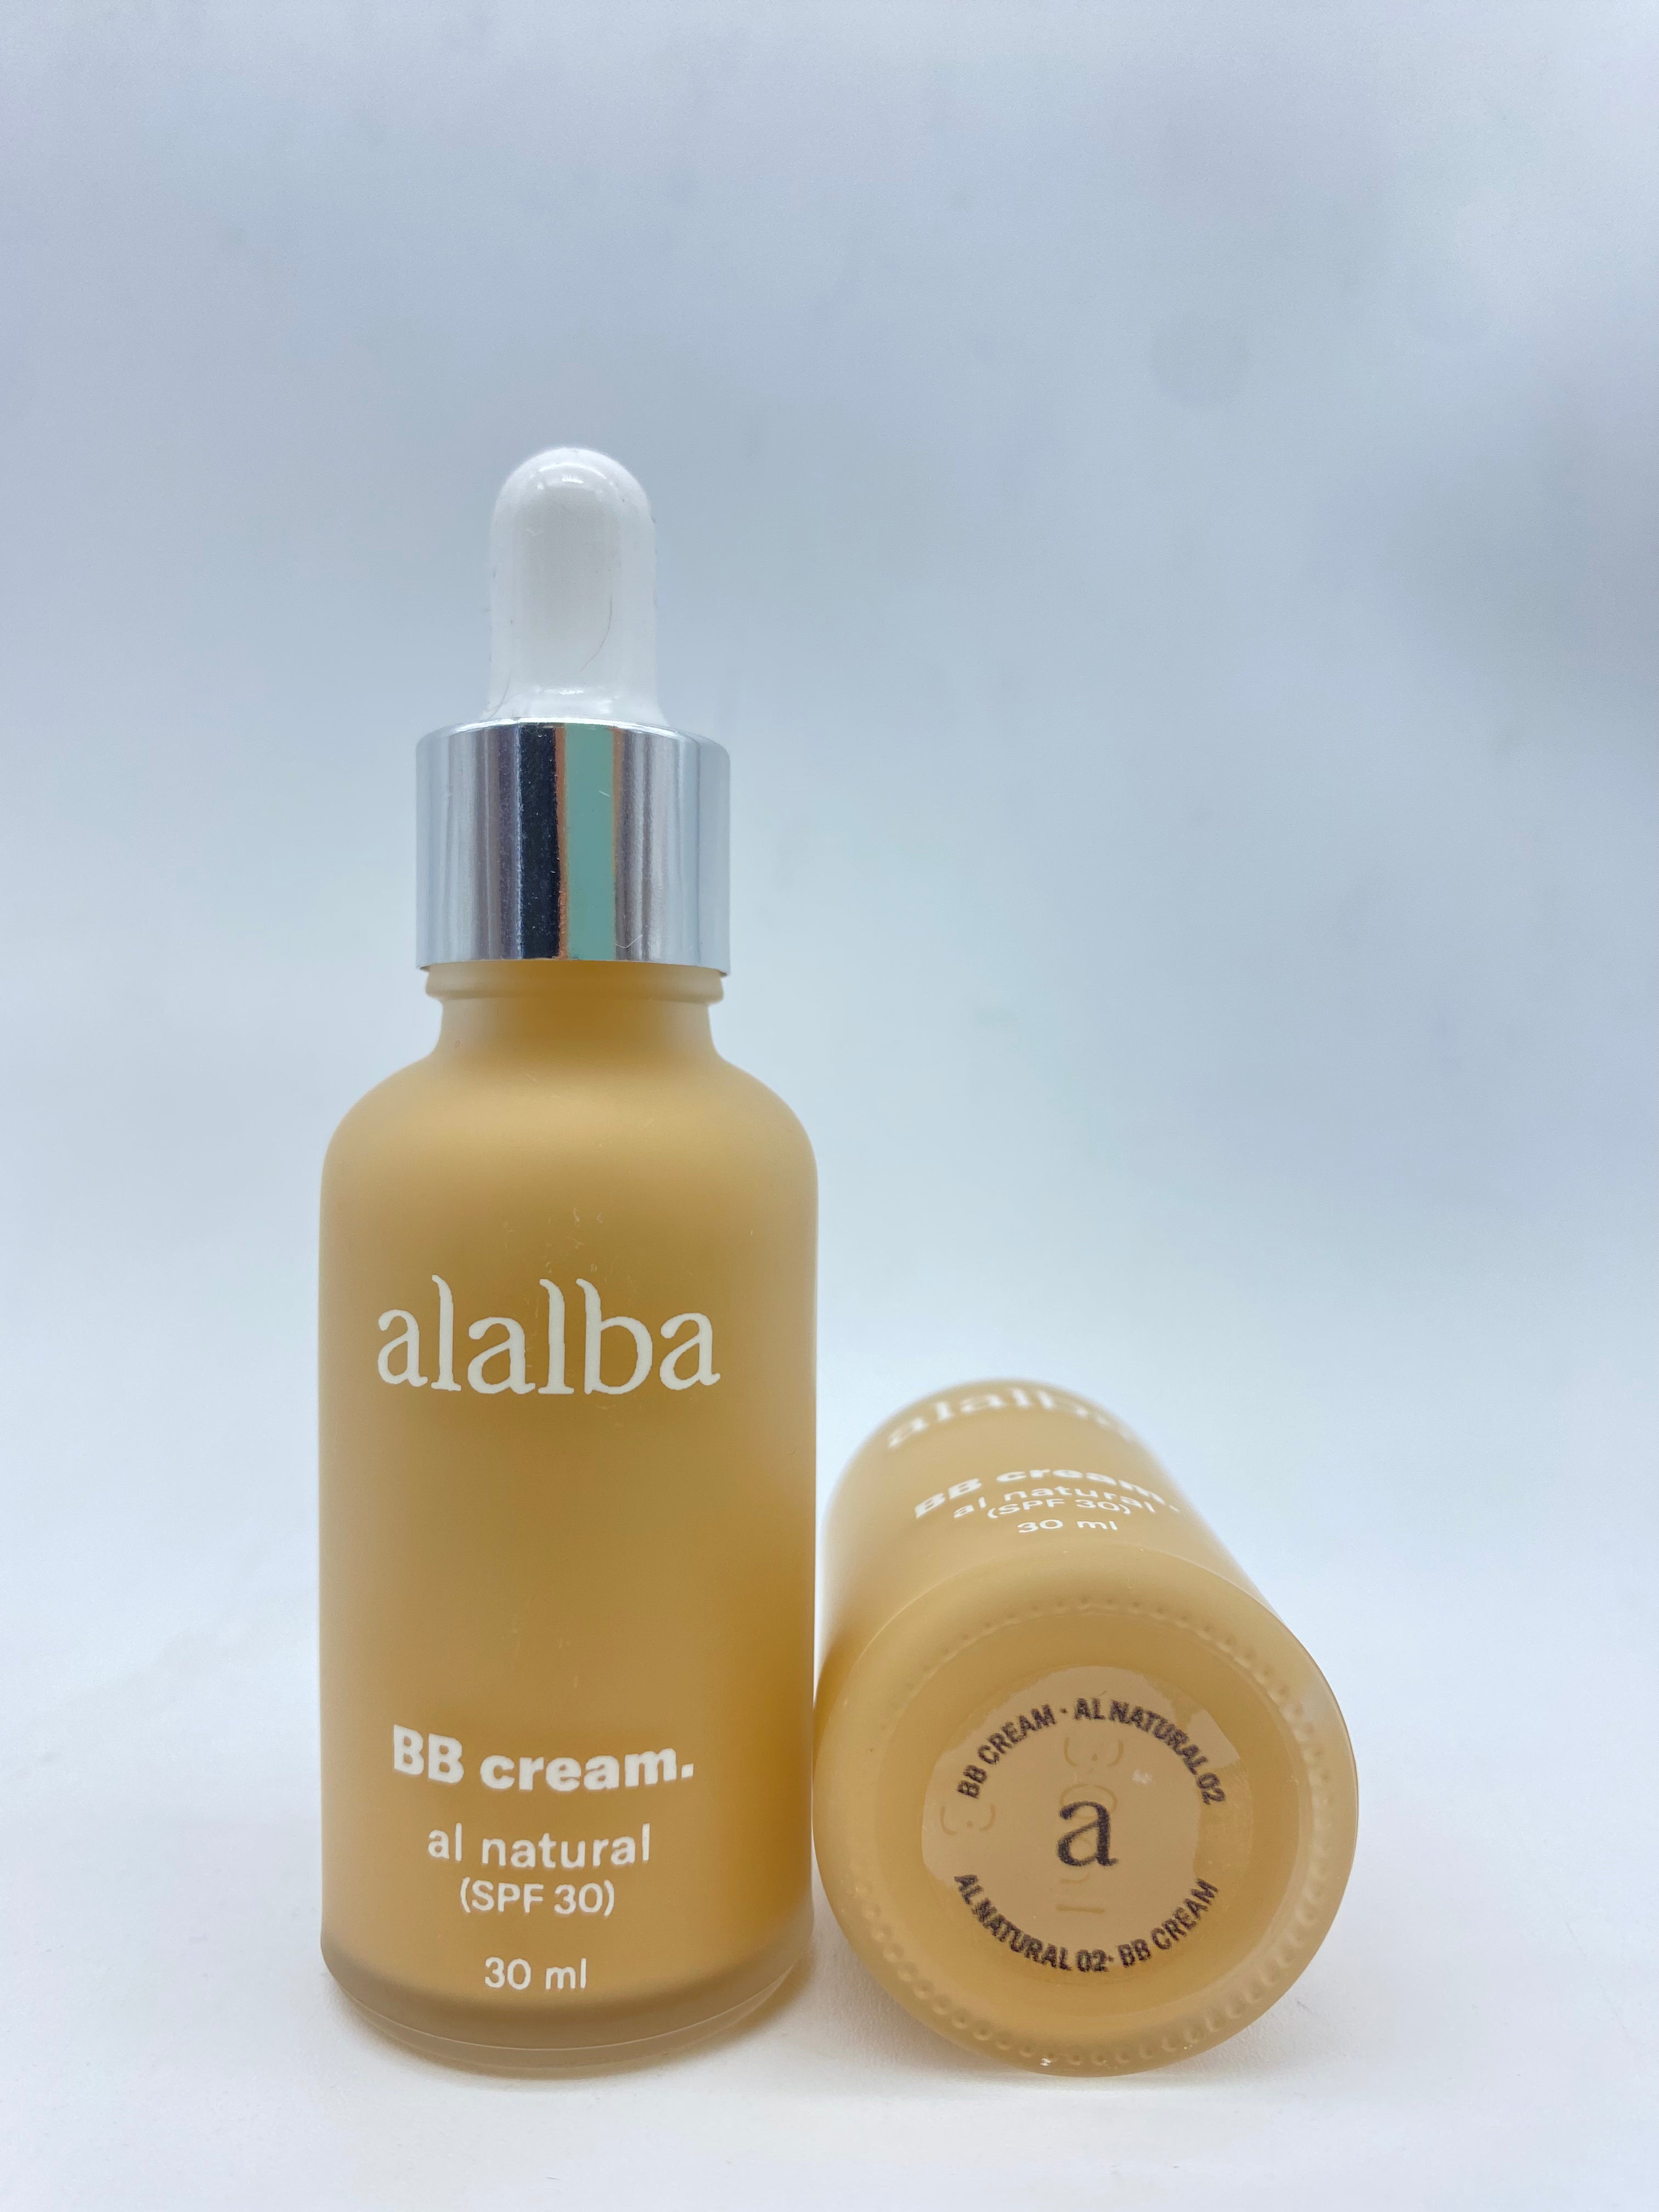 Alalba- Bb cream AL NATURAL